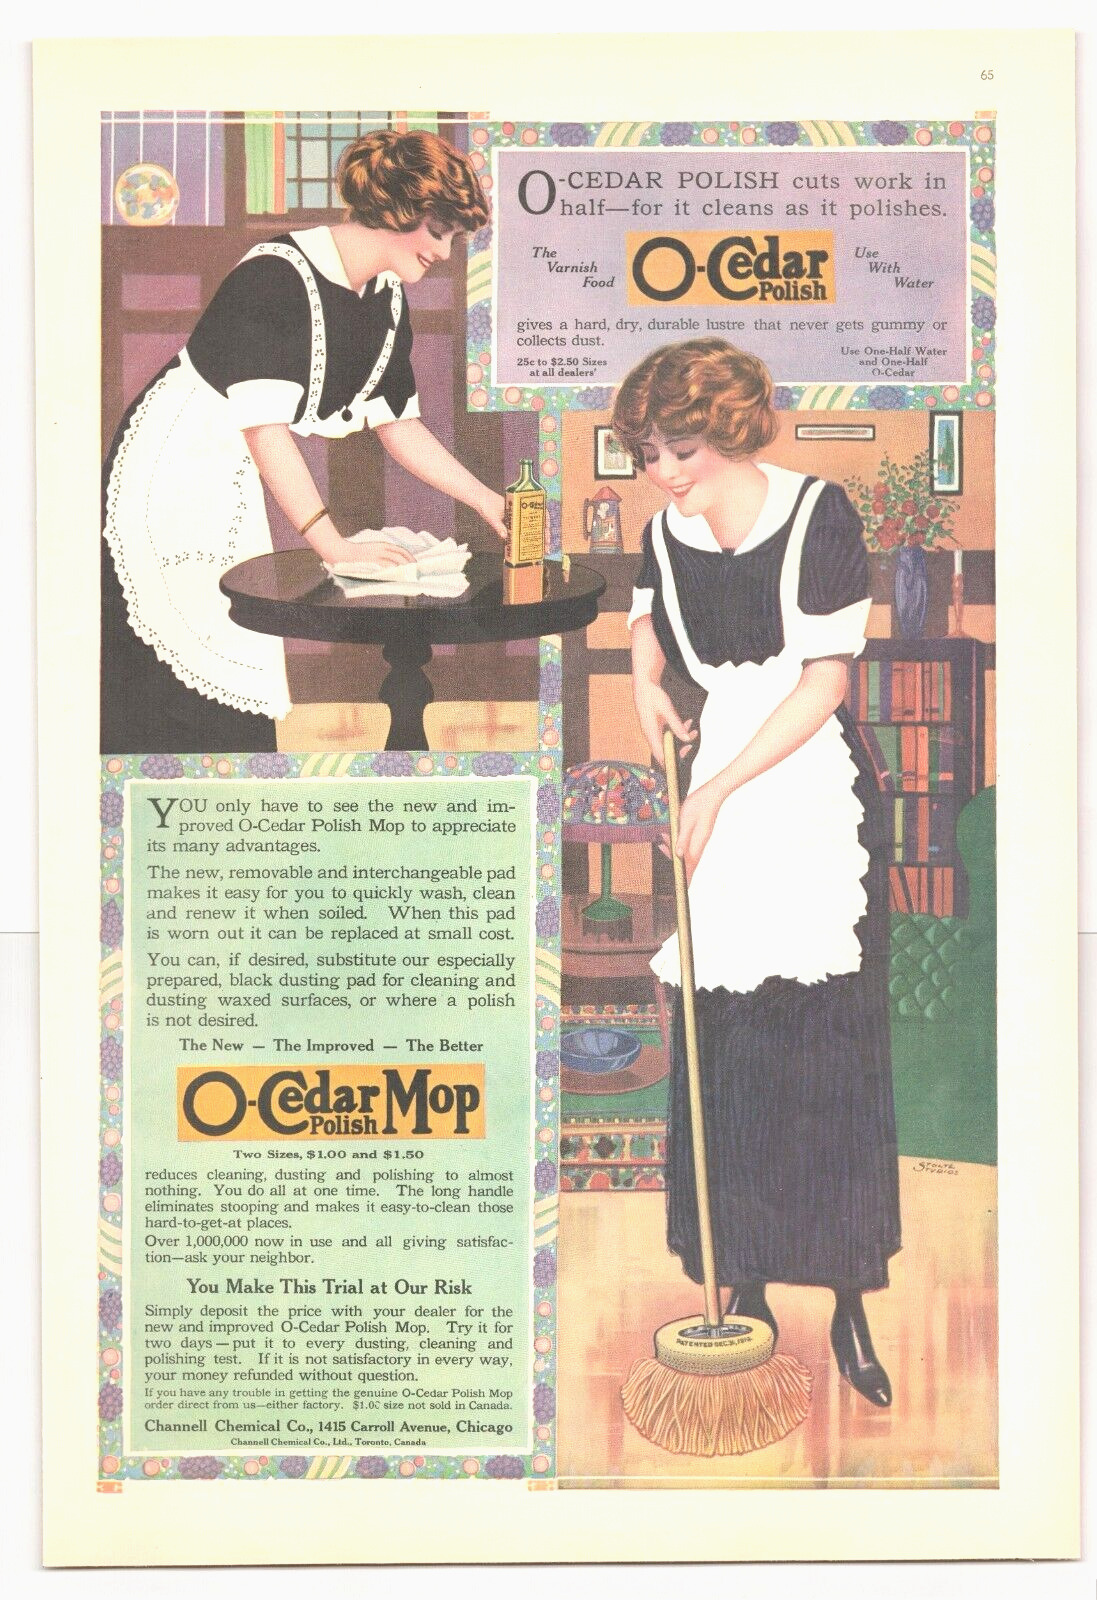 1913 O CEDAR Mop Polish antique art PRINT AD household cleaner furniture maids